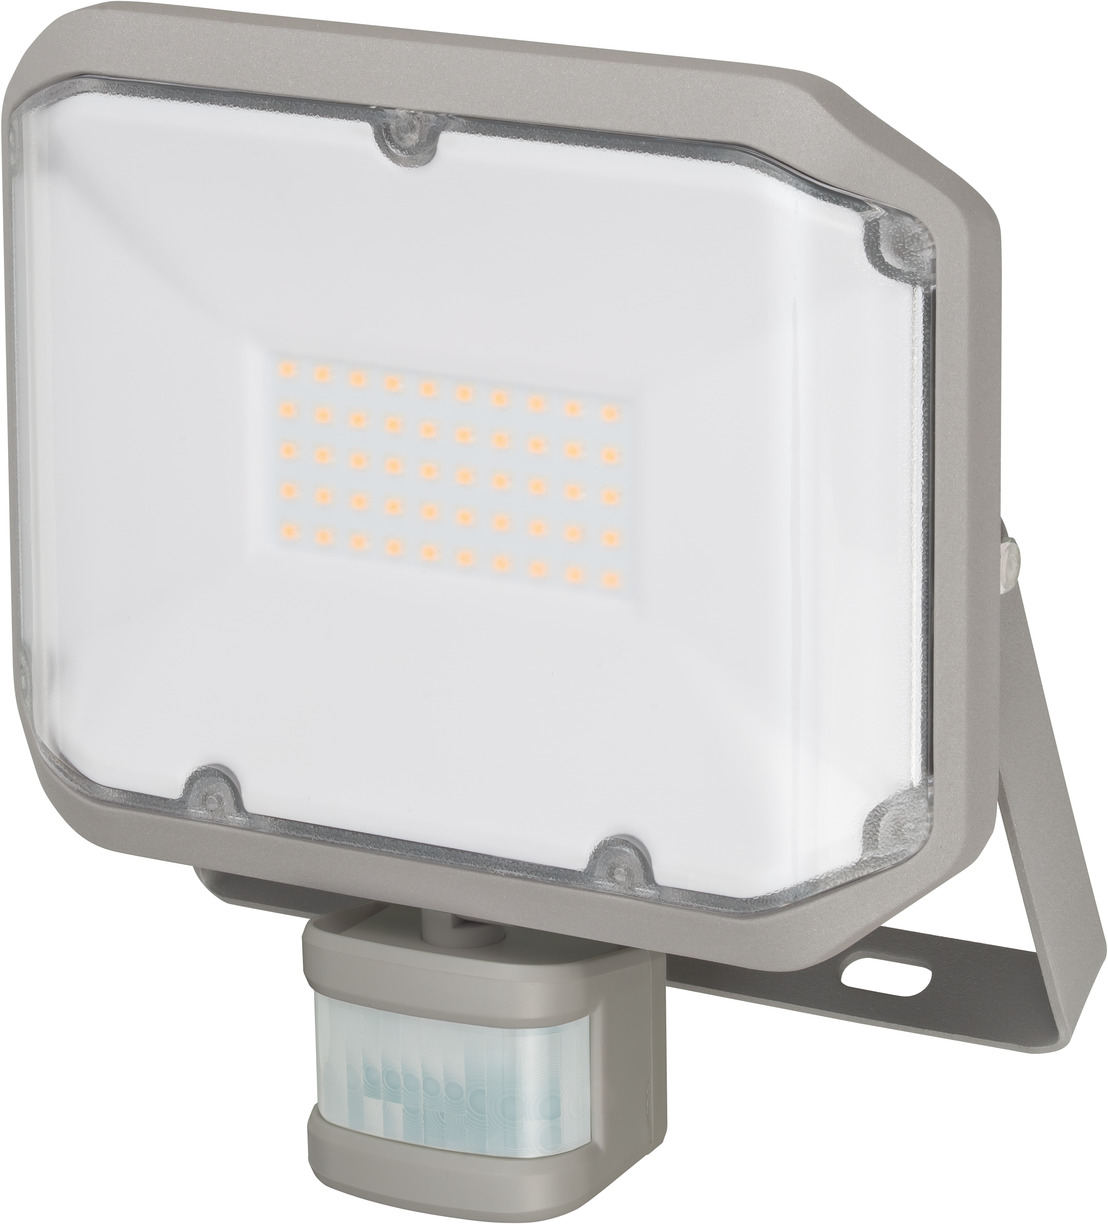 LED Strahler AL 3050 30W, 3110lm, mit IP44 brennenstuhl® | P Infrarot-Bewegungsmelder